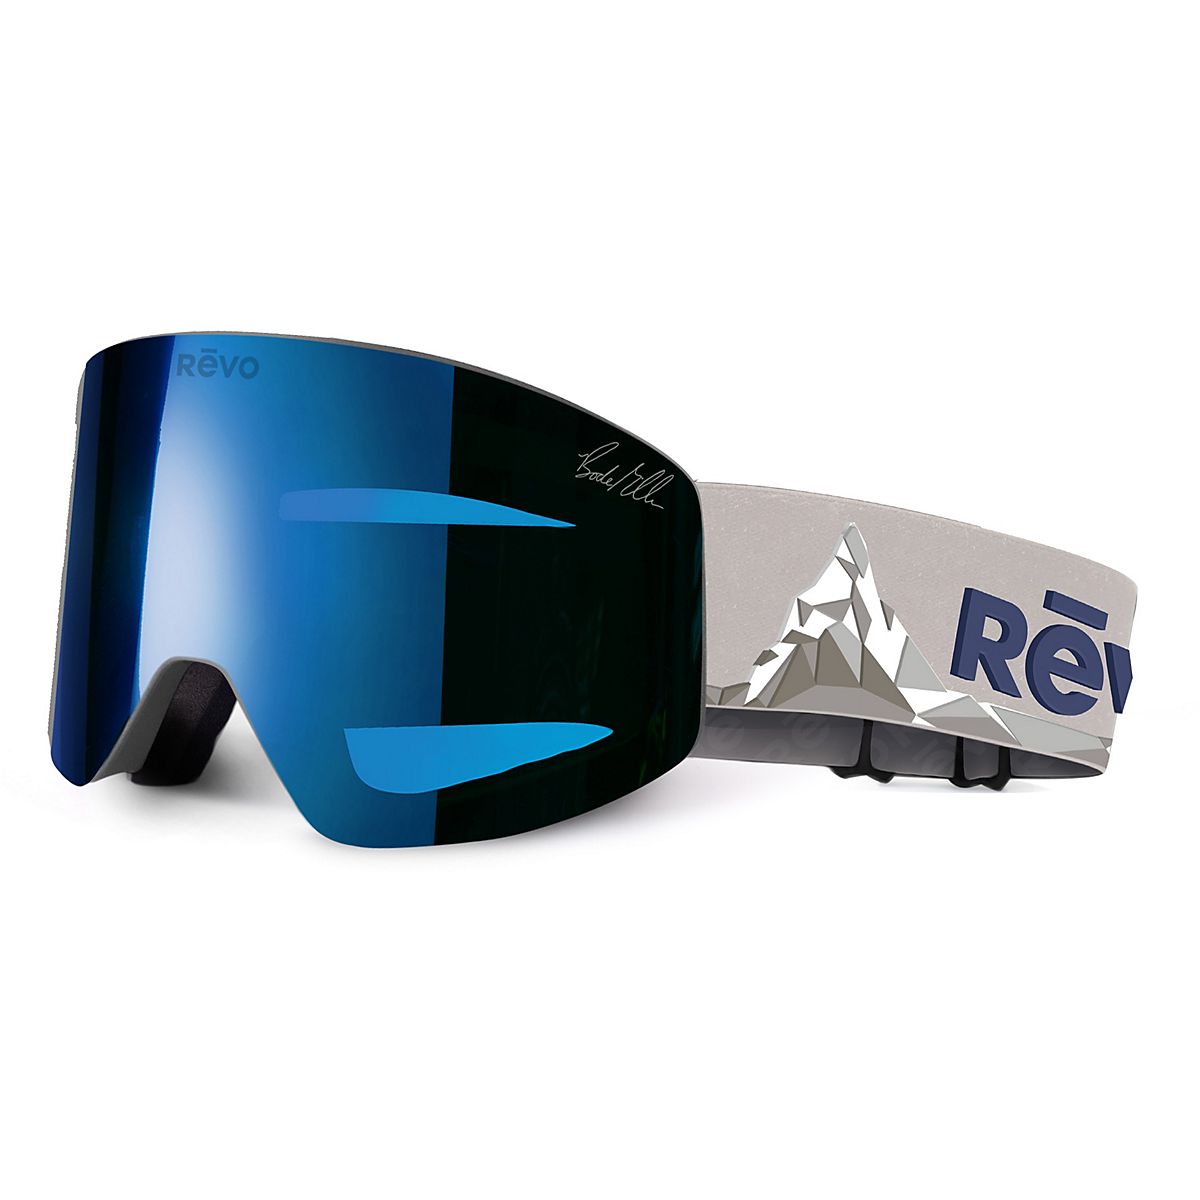 Revo Bode Miller No. 6 Ski Goggles | Free Shipping at Academy